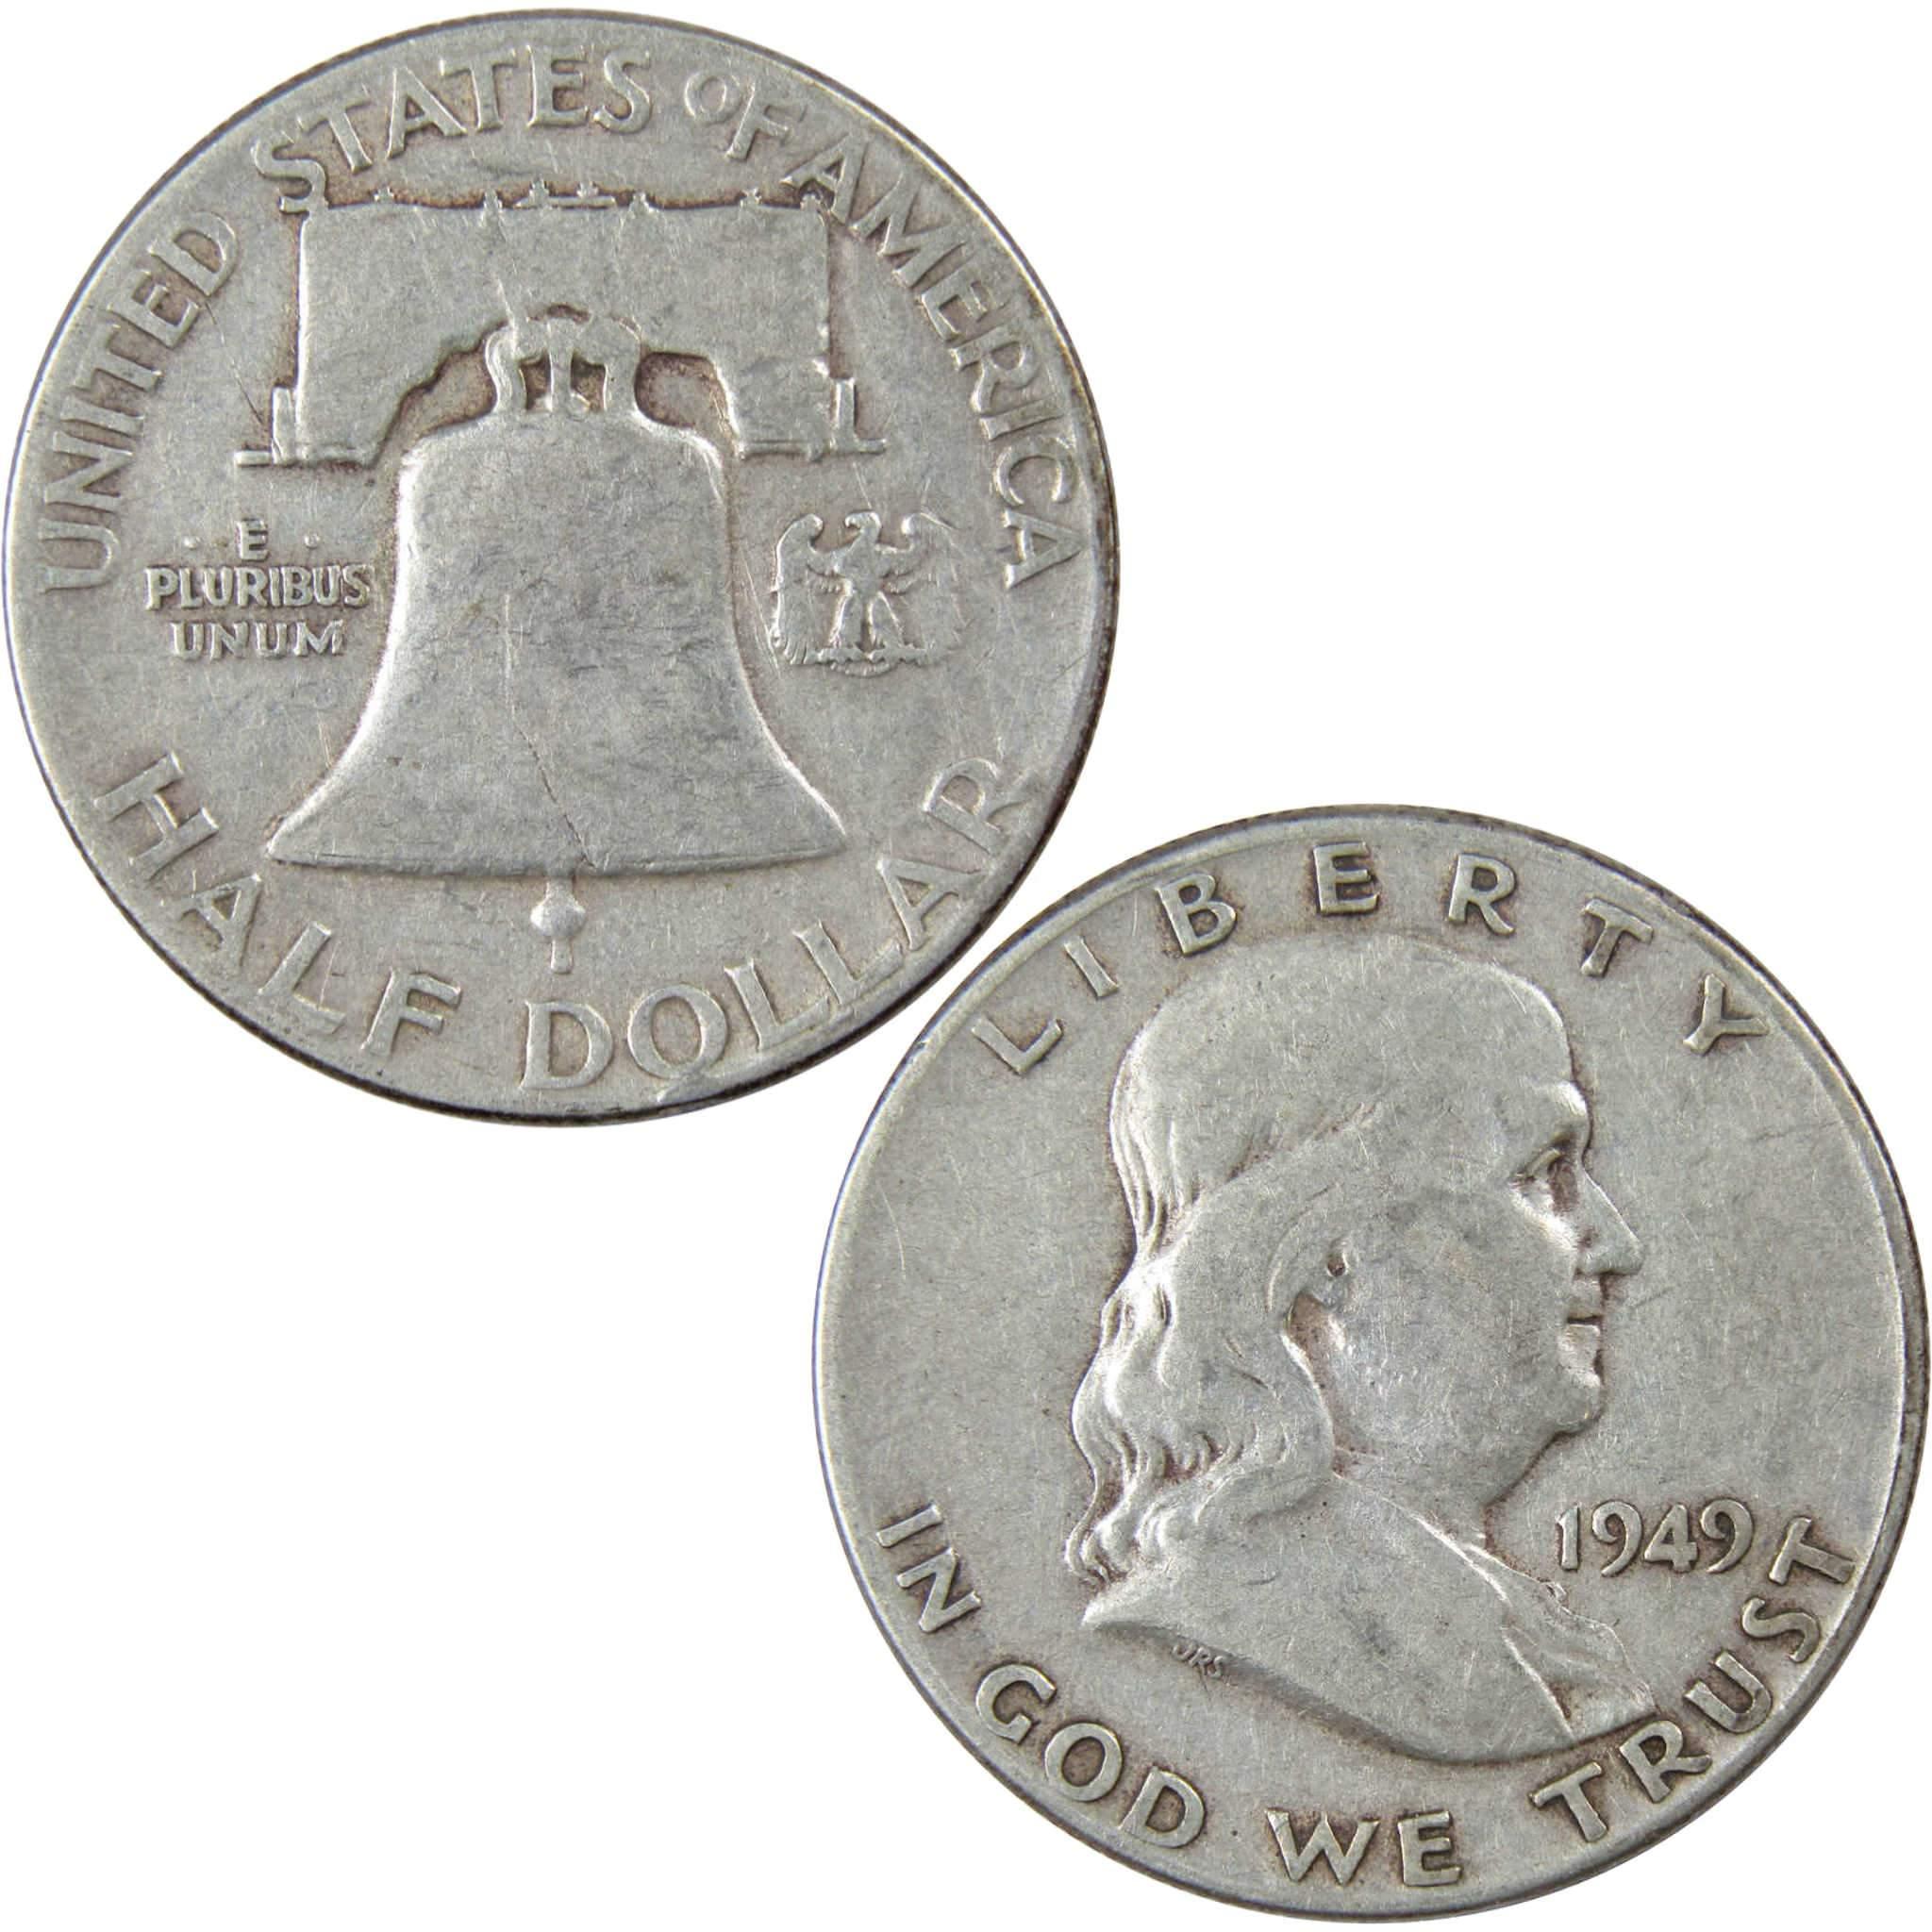 1949 Franklin Half Dollar F Fine 90% Silver 50c US Coin Collectible